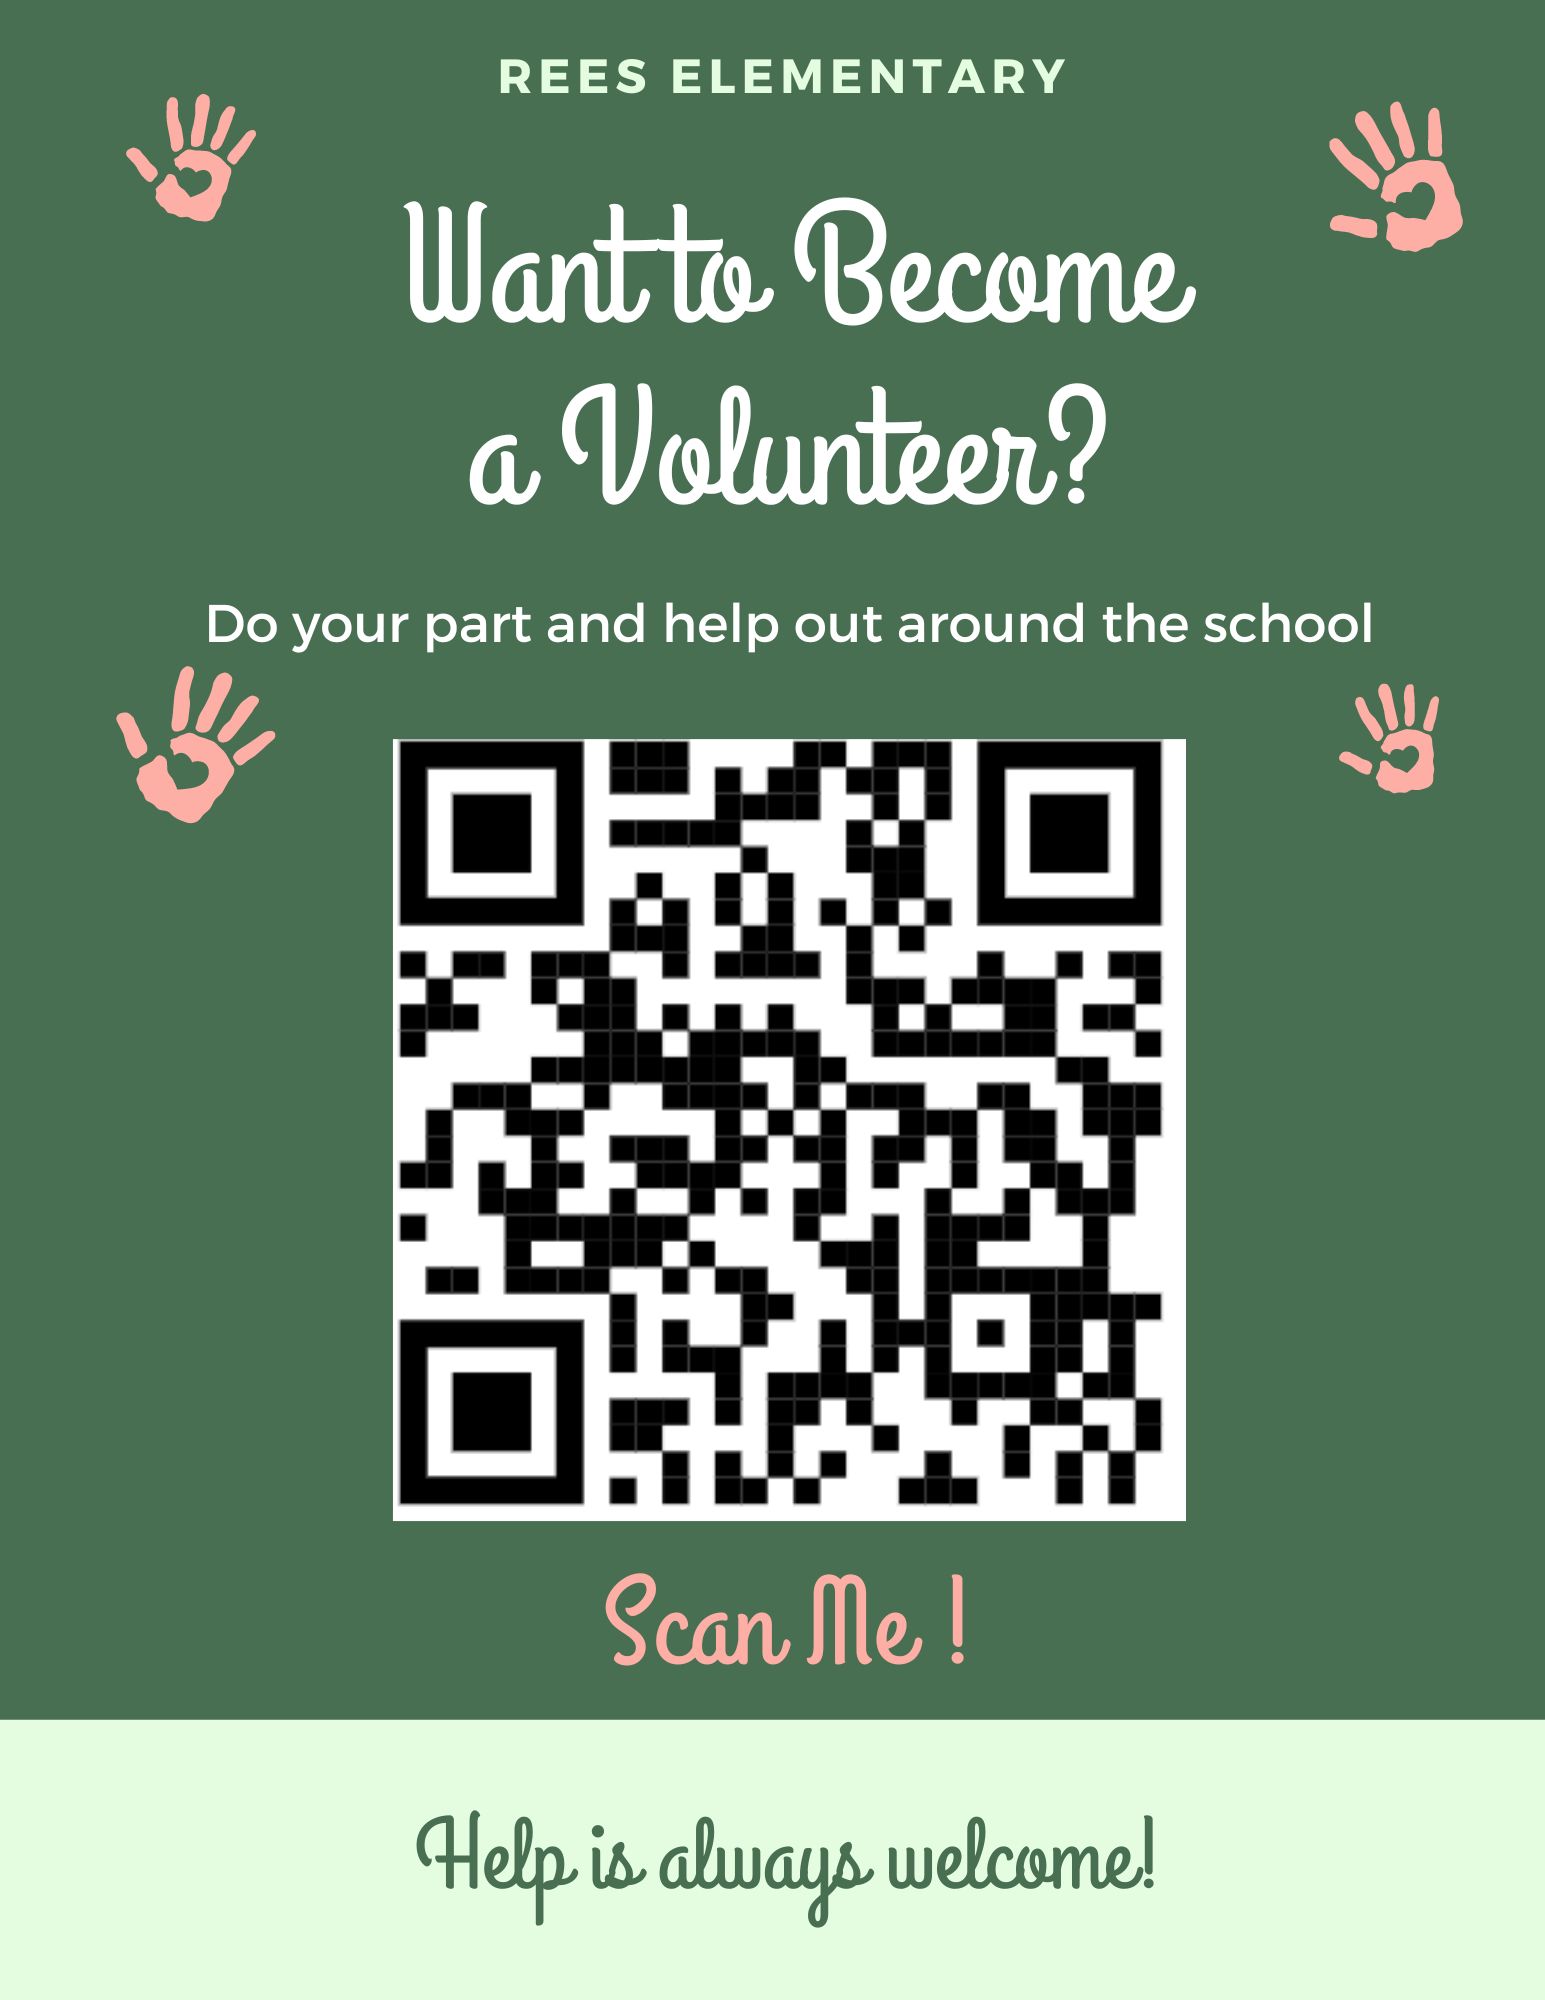 Want to volunteer?